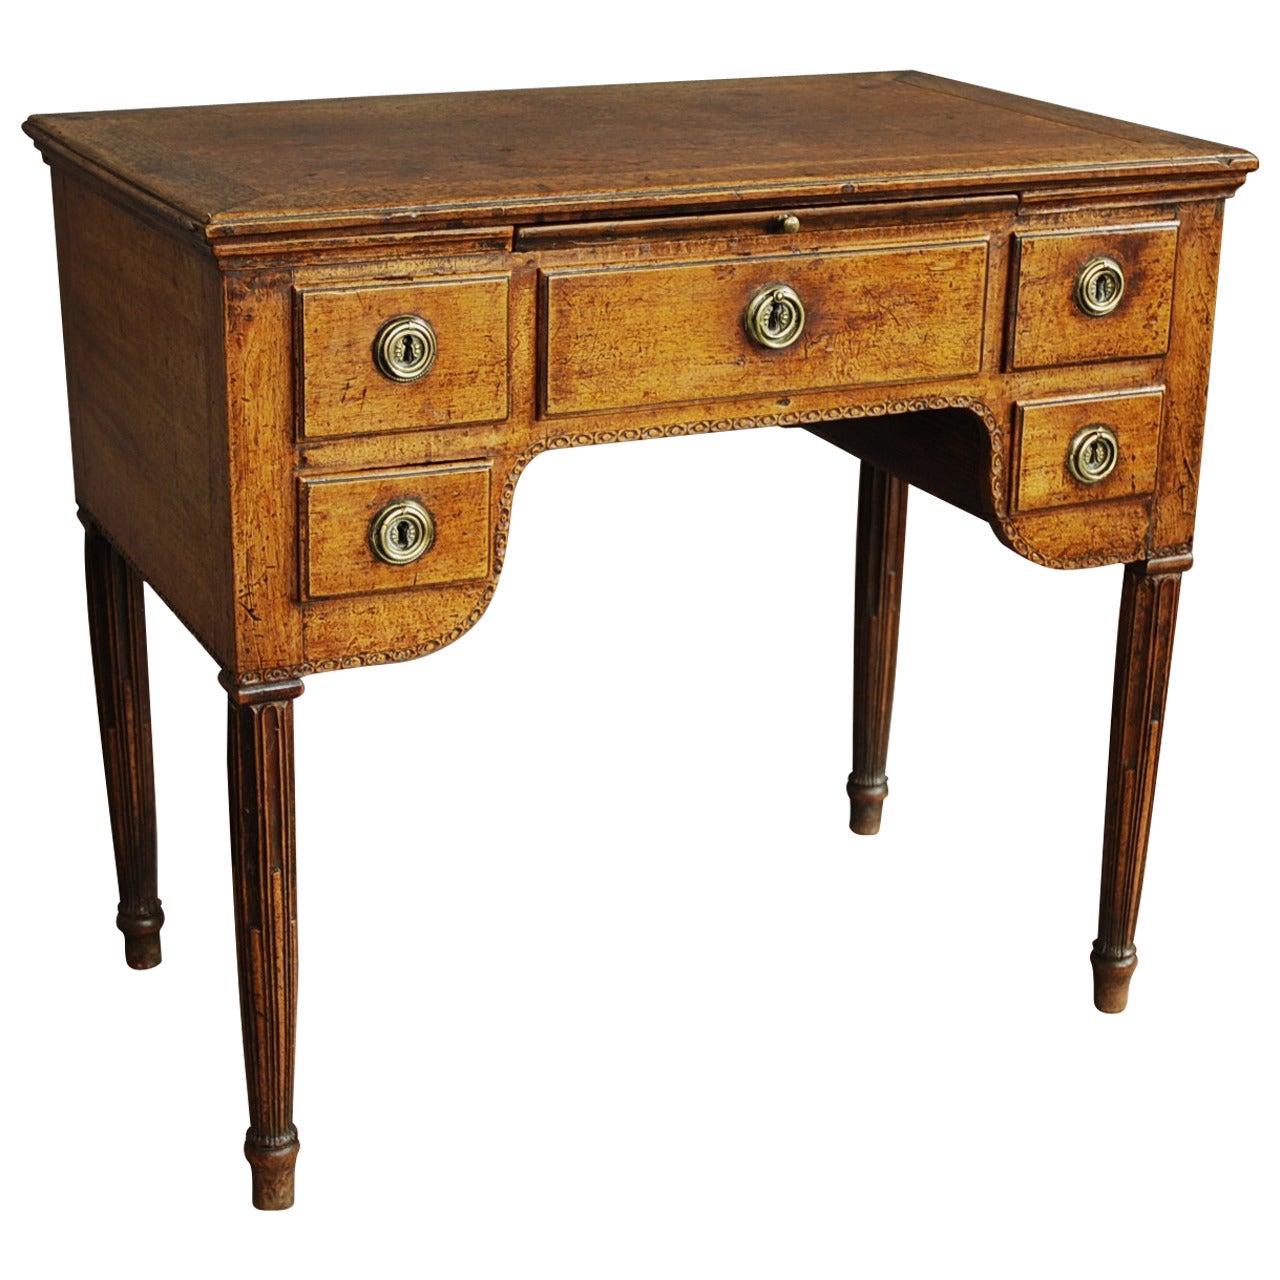 18th Century Continental (Possibly Dutch) Walnut Desk or Table